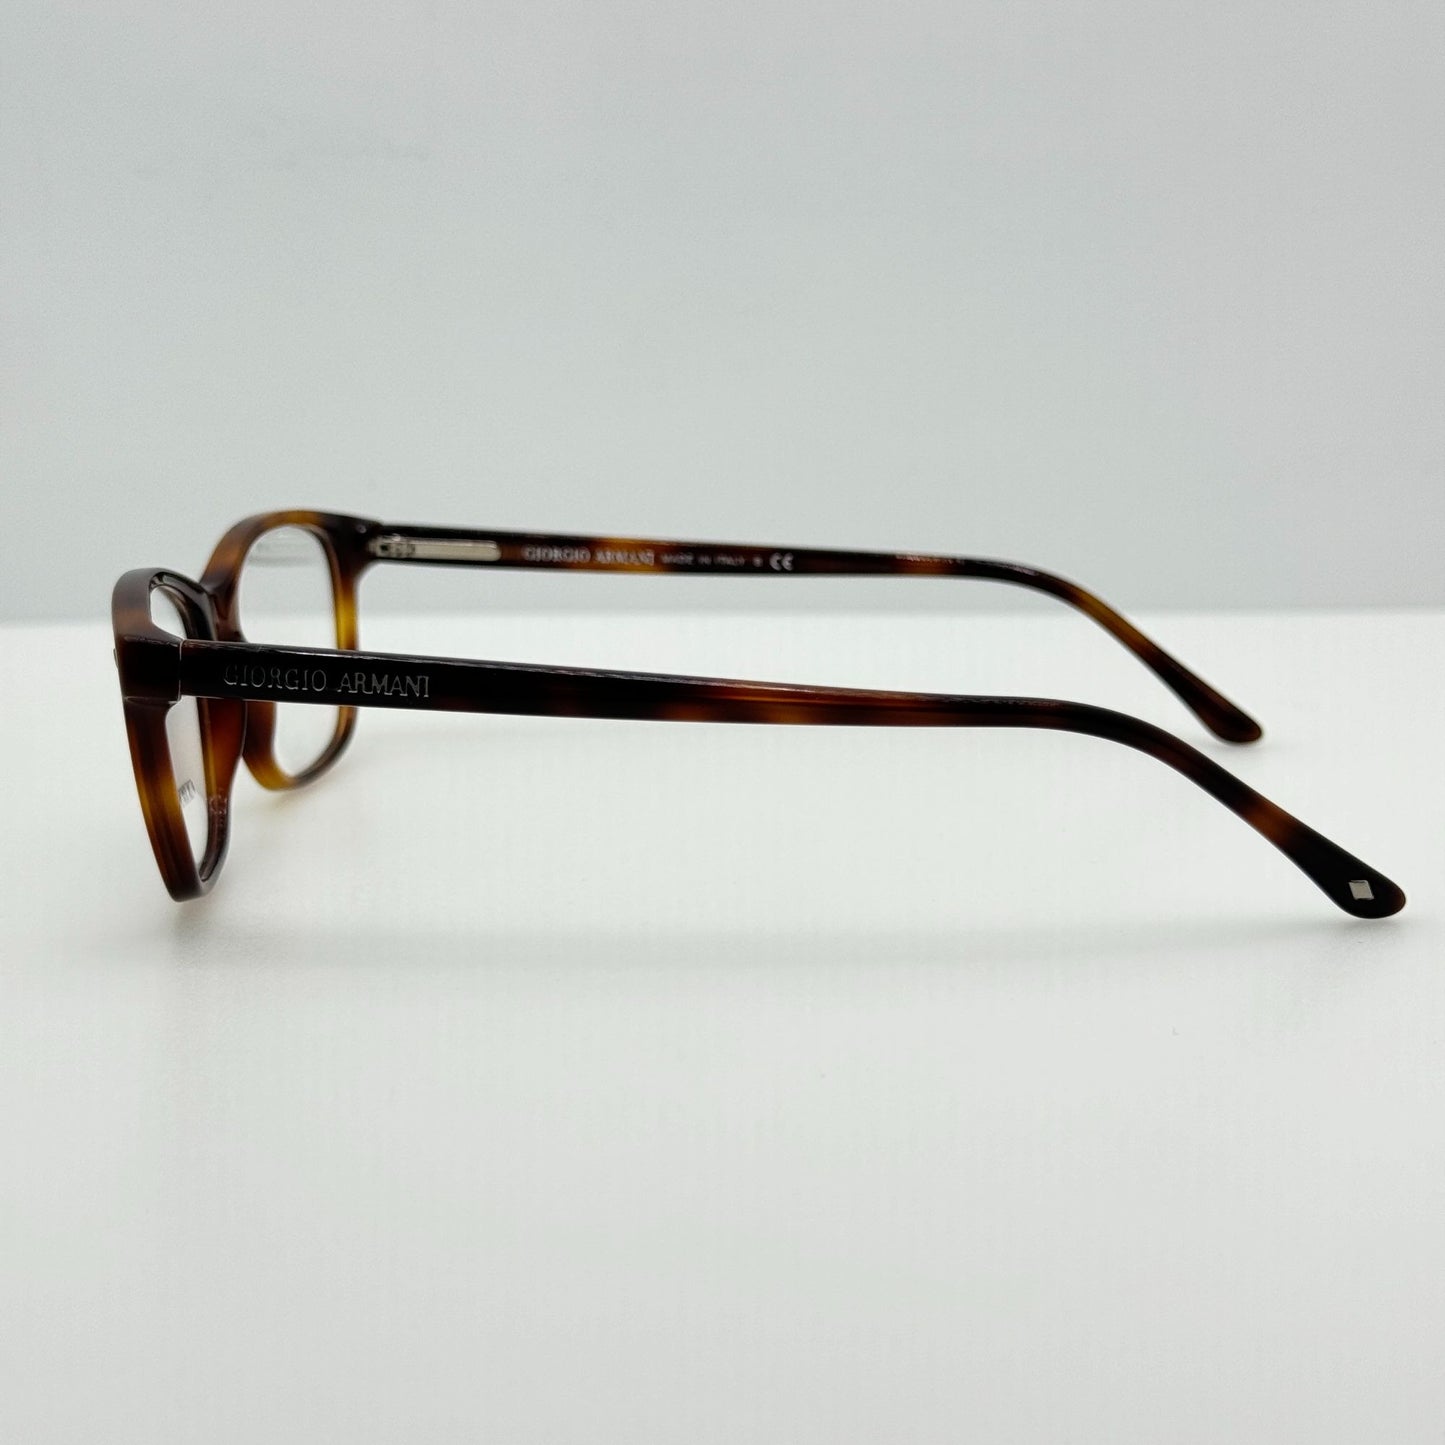 Giorgio Armani Eyeglasses Eye Glasses Frames AR 7021 5177 52-16-140